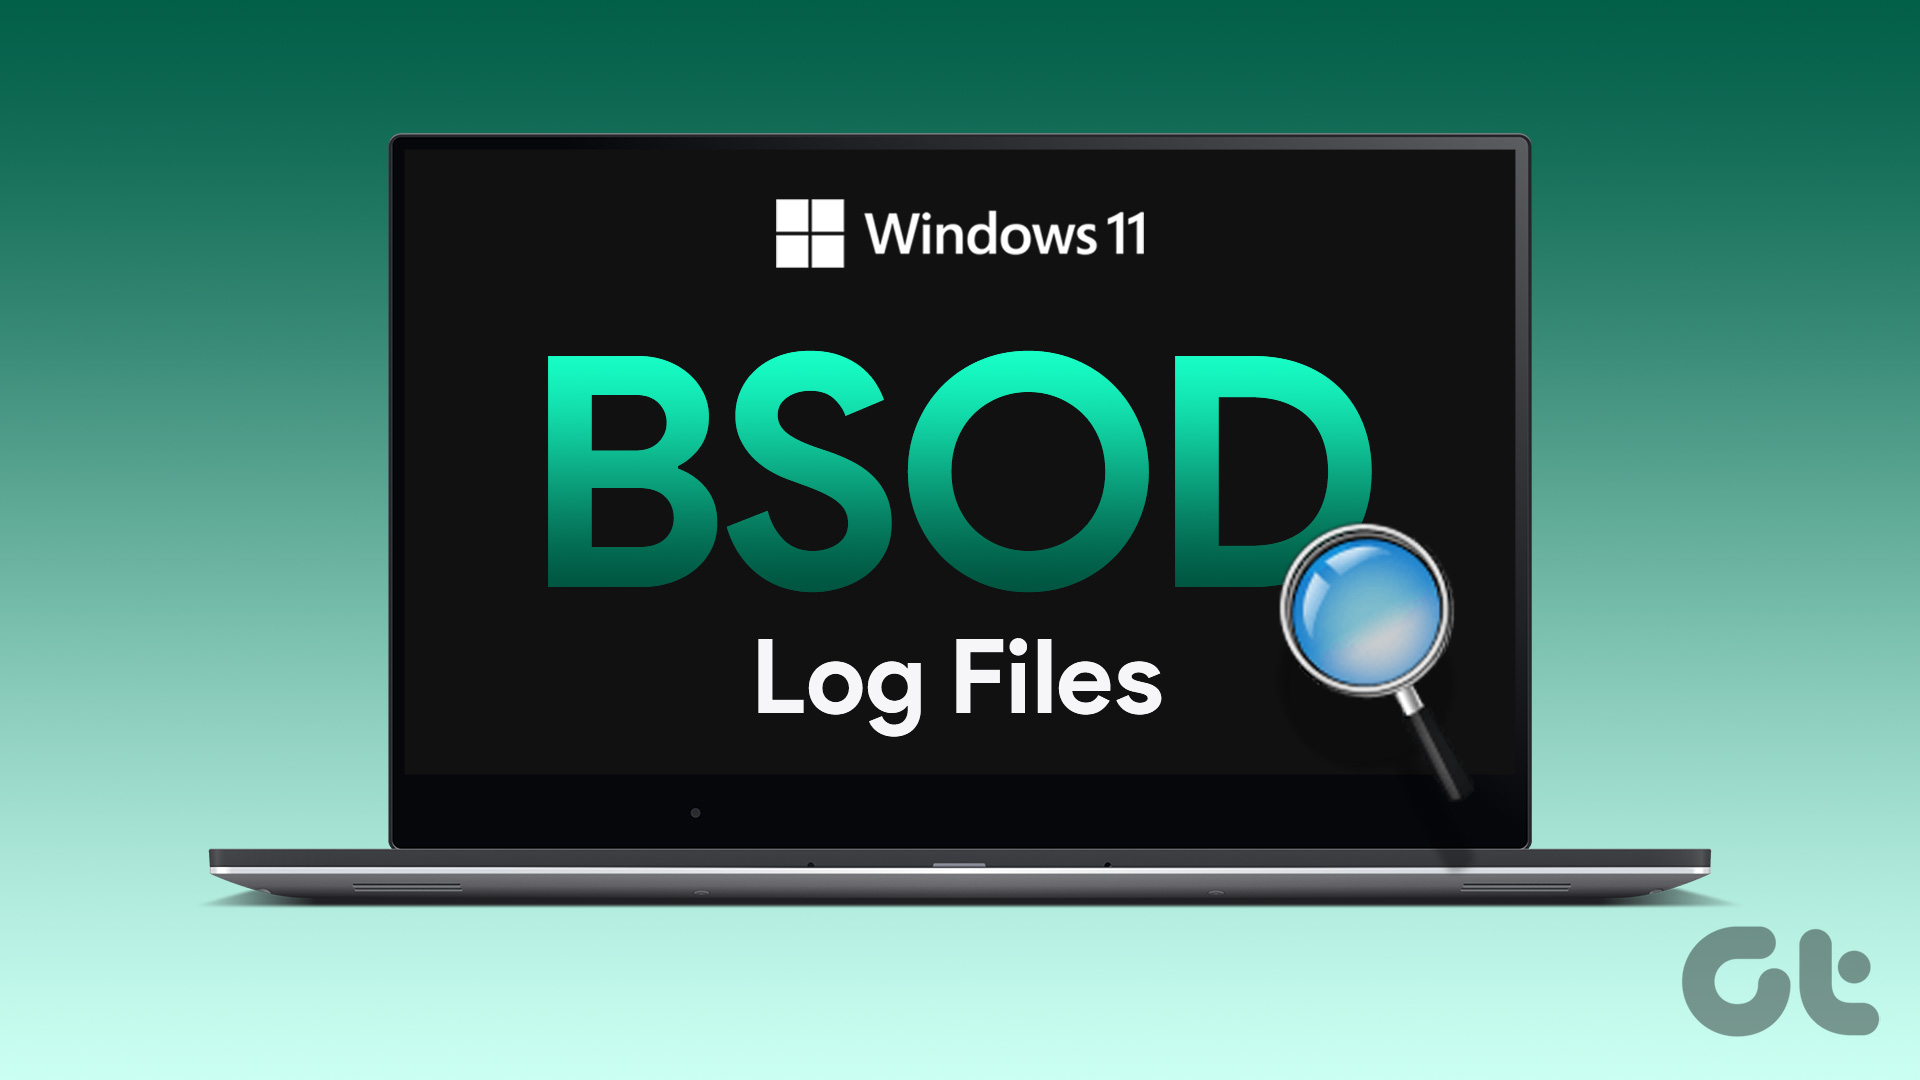 Find BSOD Log Files in Windows